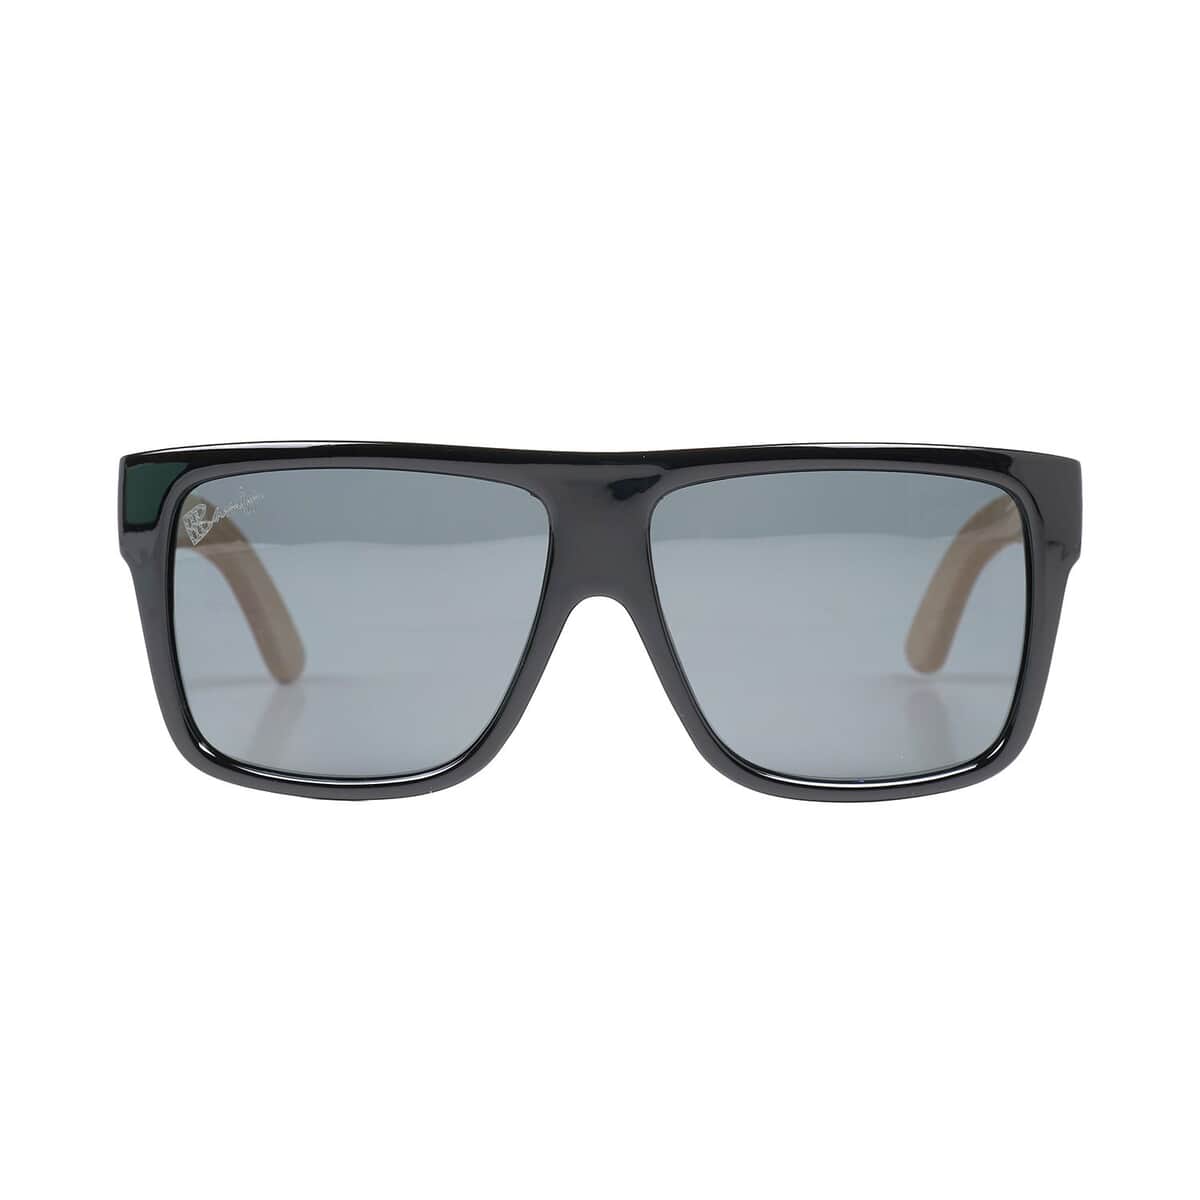 Bamfy Oakland UV400 Polarized Sunglasses with Bamboo Legs and Case -Black image number 0